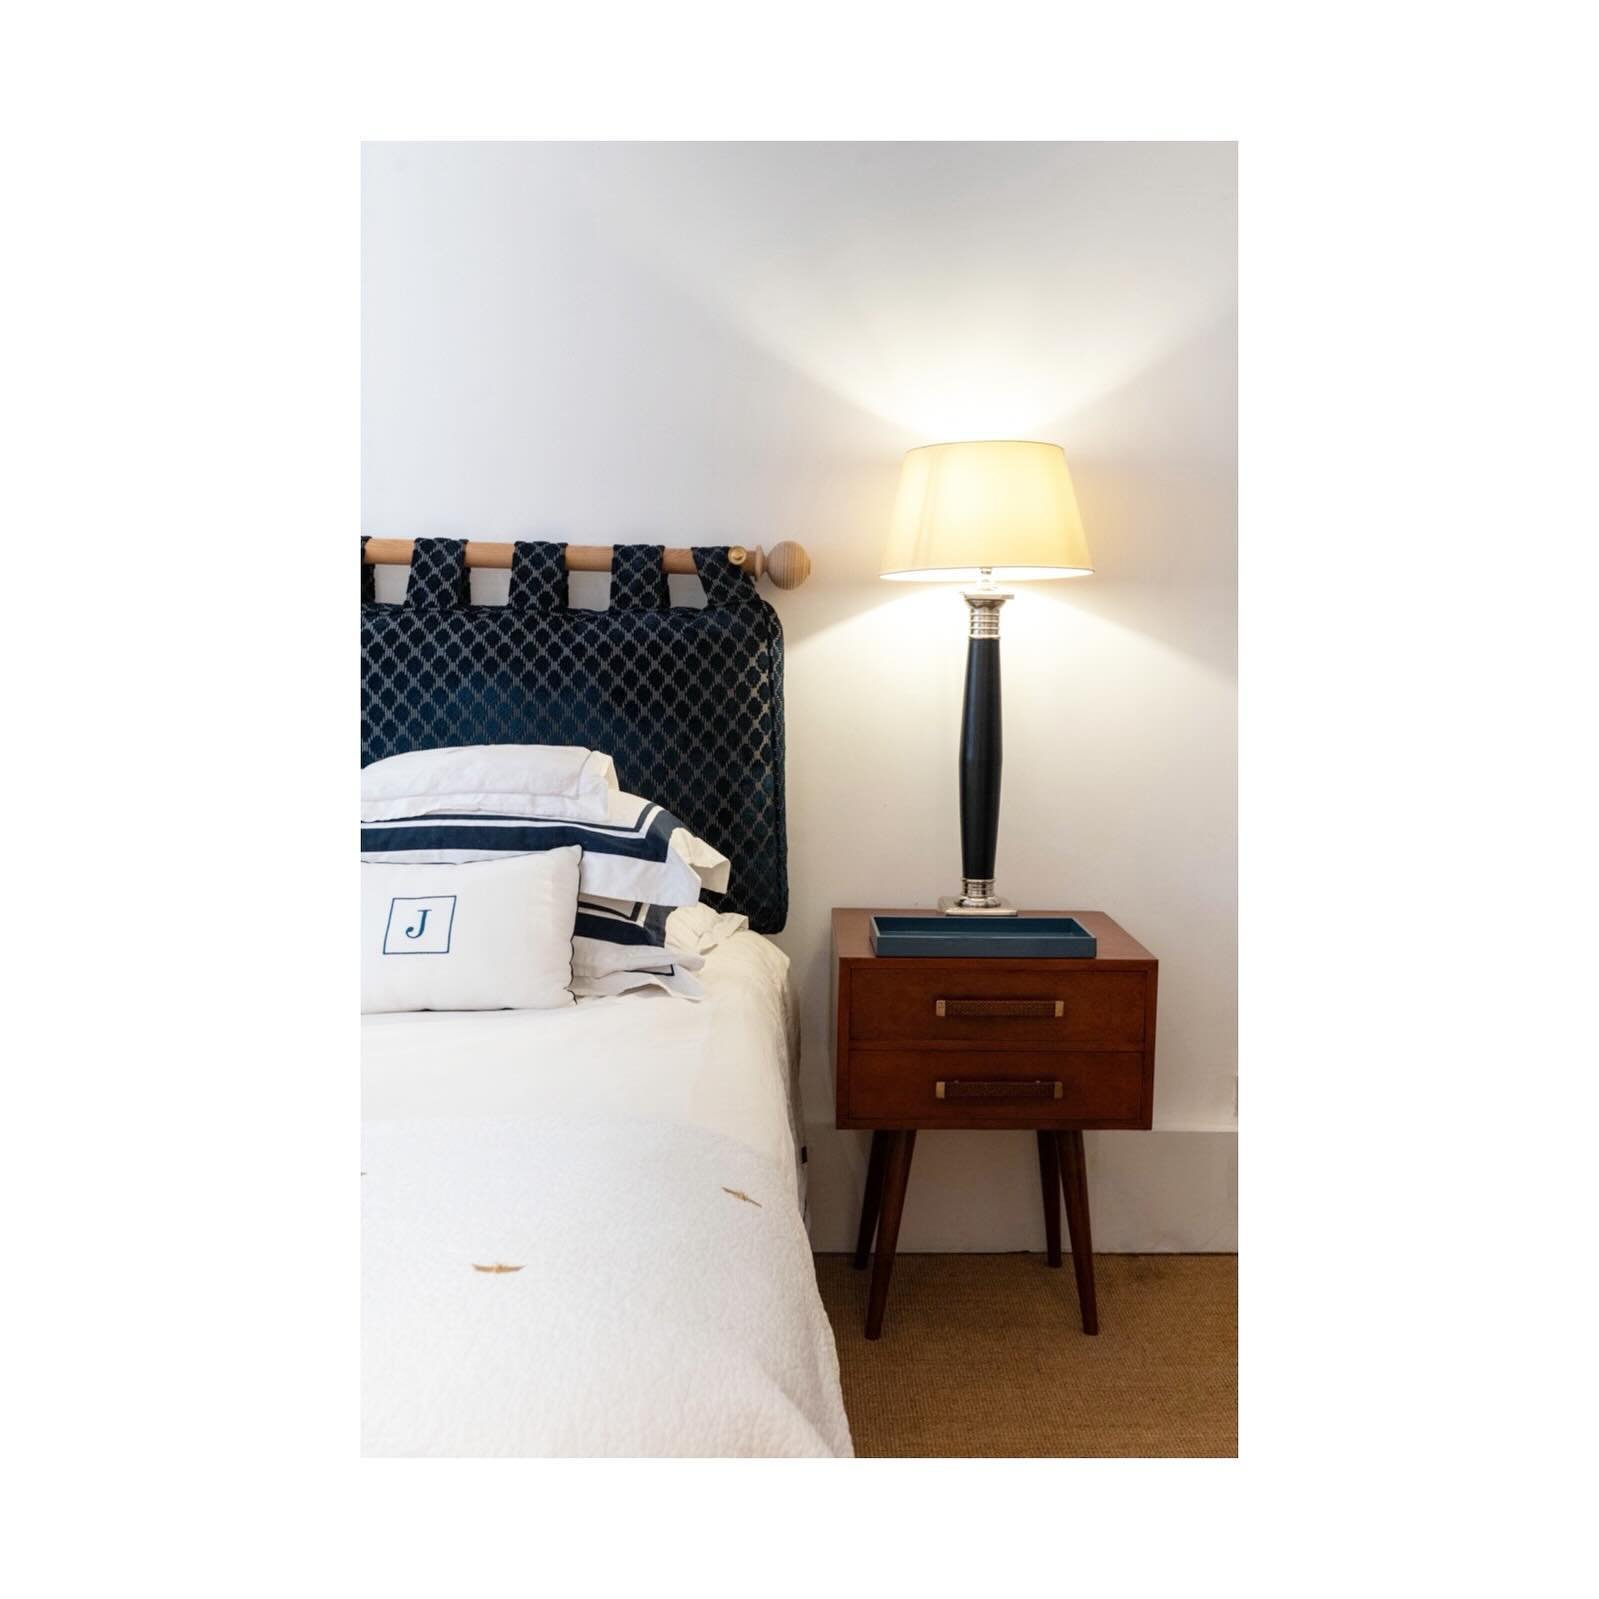 Gorgeous bedroom by @flavia 💙🤍
&bull;
&bull;
&bull;
#interiors #londonphotography #londoninteriors #houseandgarden #londonarchitecture #london #interiorphotography #architecturaldigest #interiorsoflondon #lifestylephotography #londonhouses #photolo